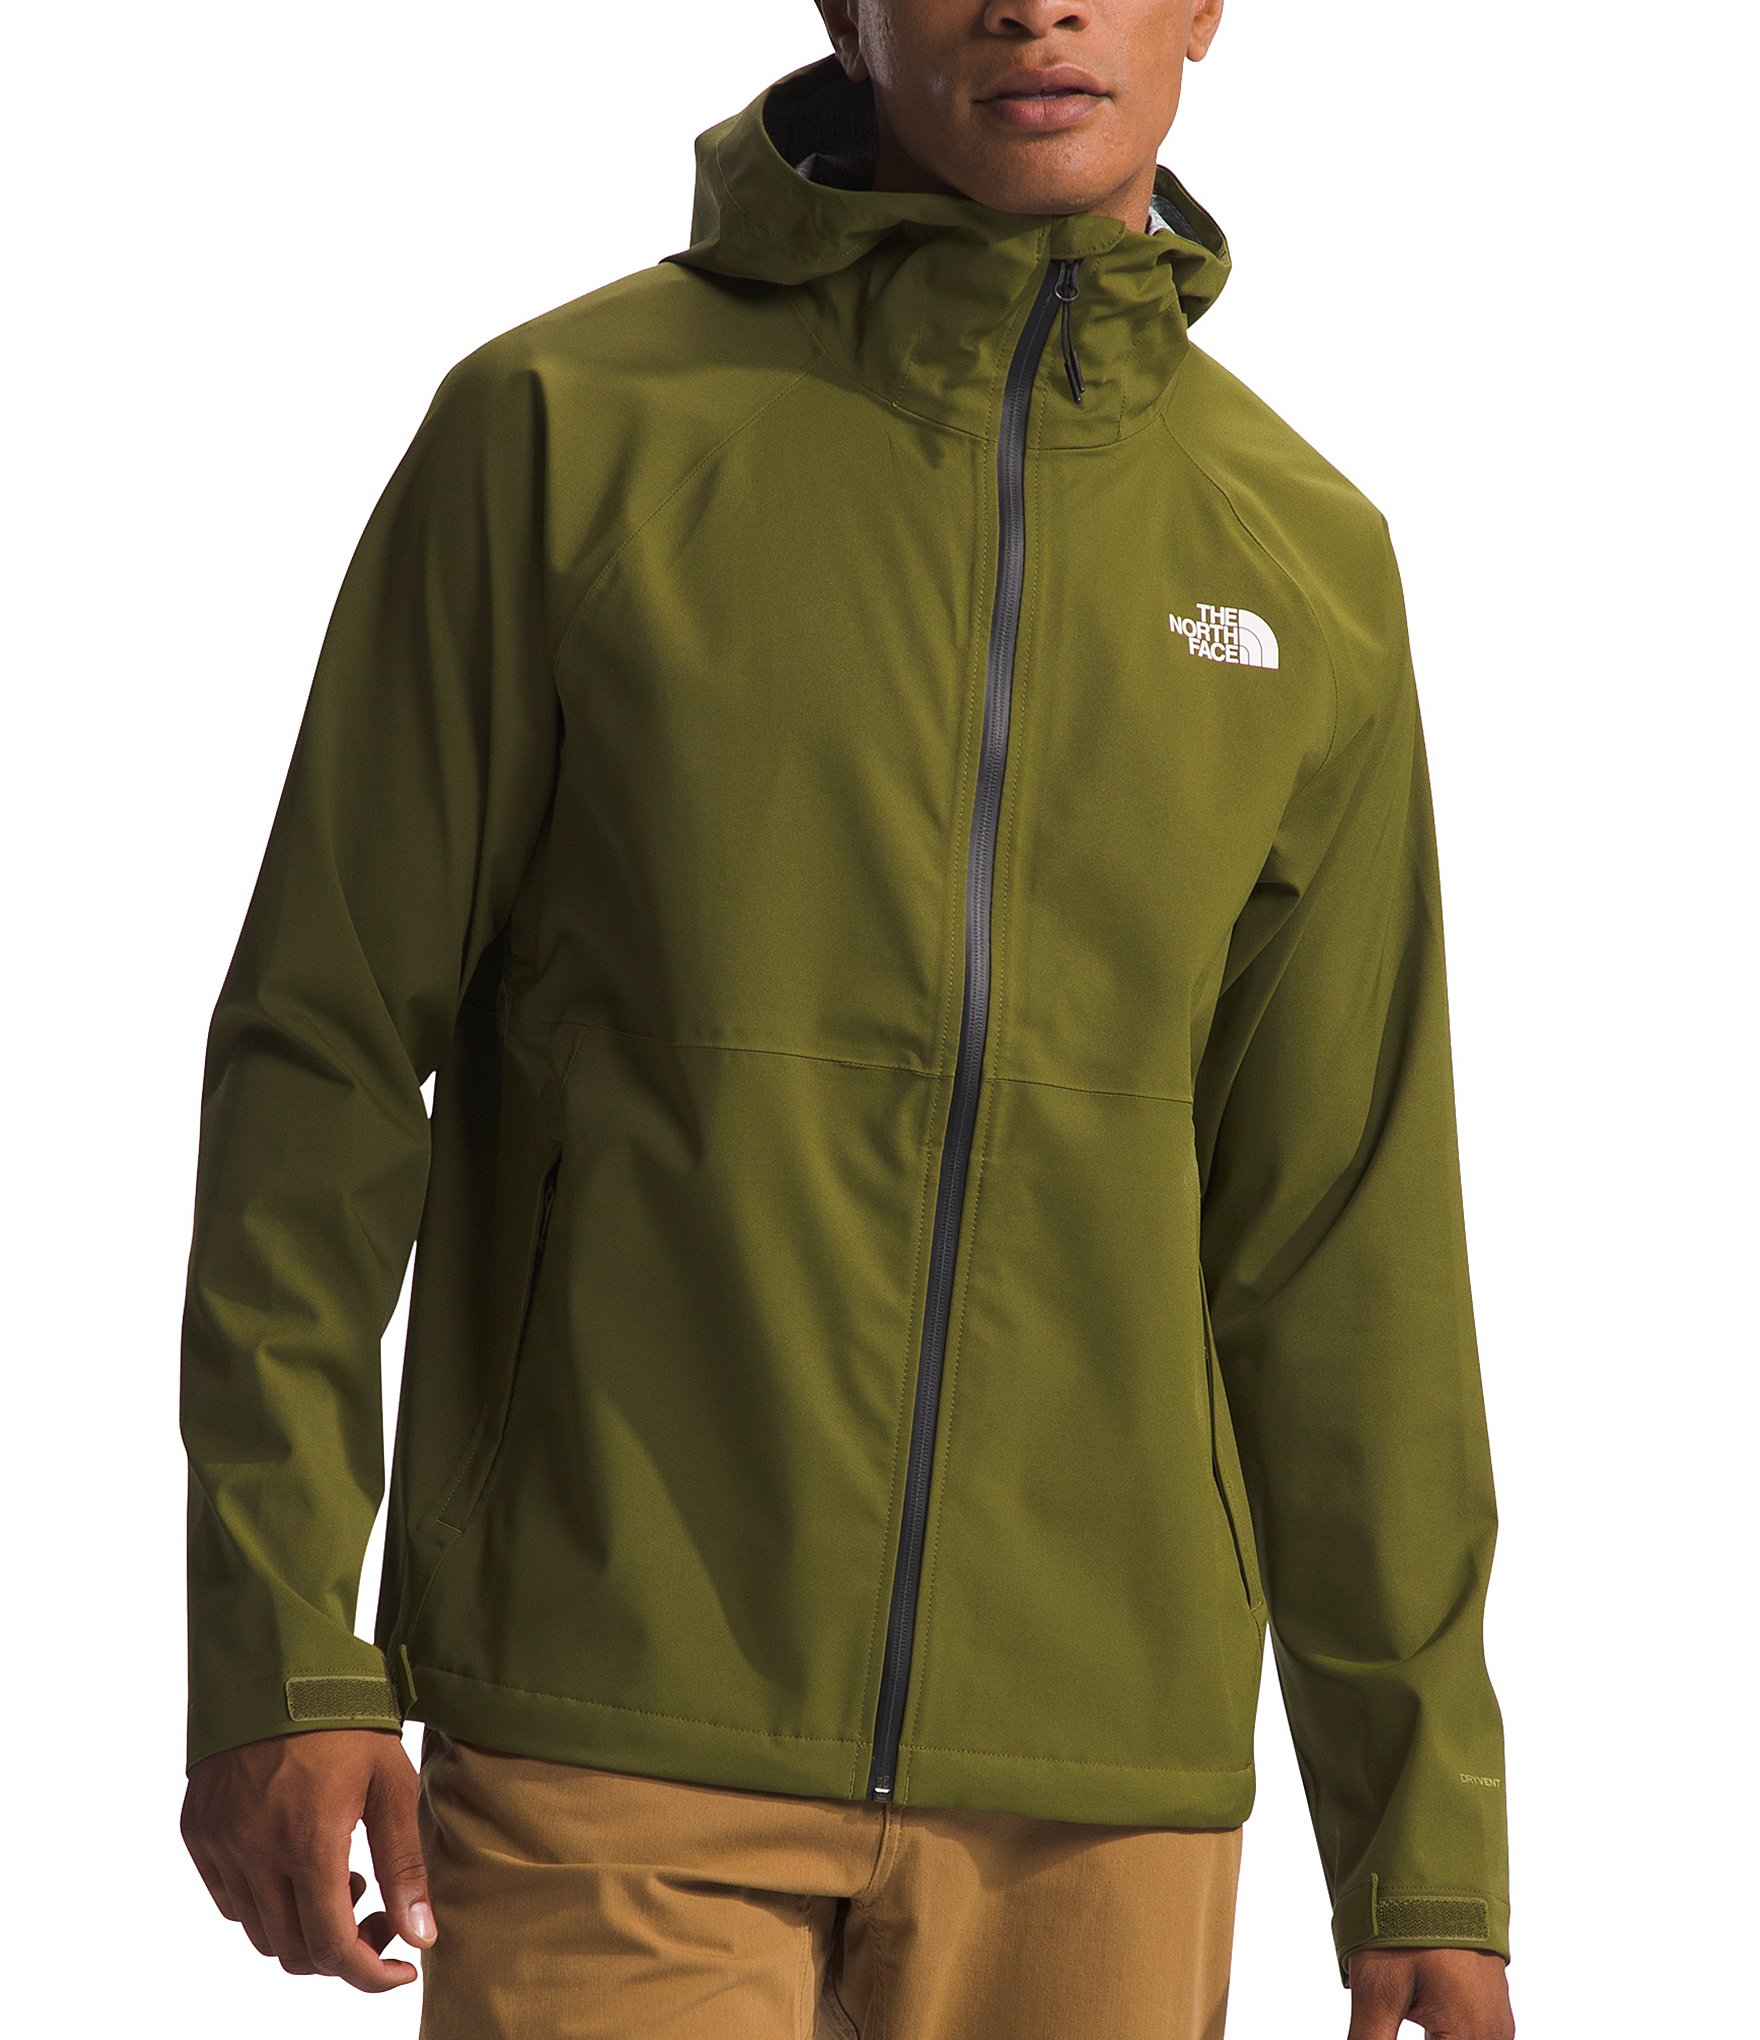 THE NORTH FACE - Men's Resolve Full-Zip Fleece Jacket - Forest